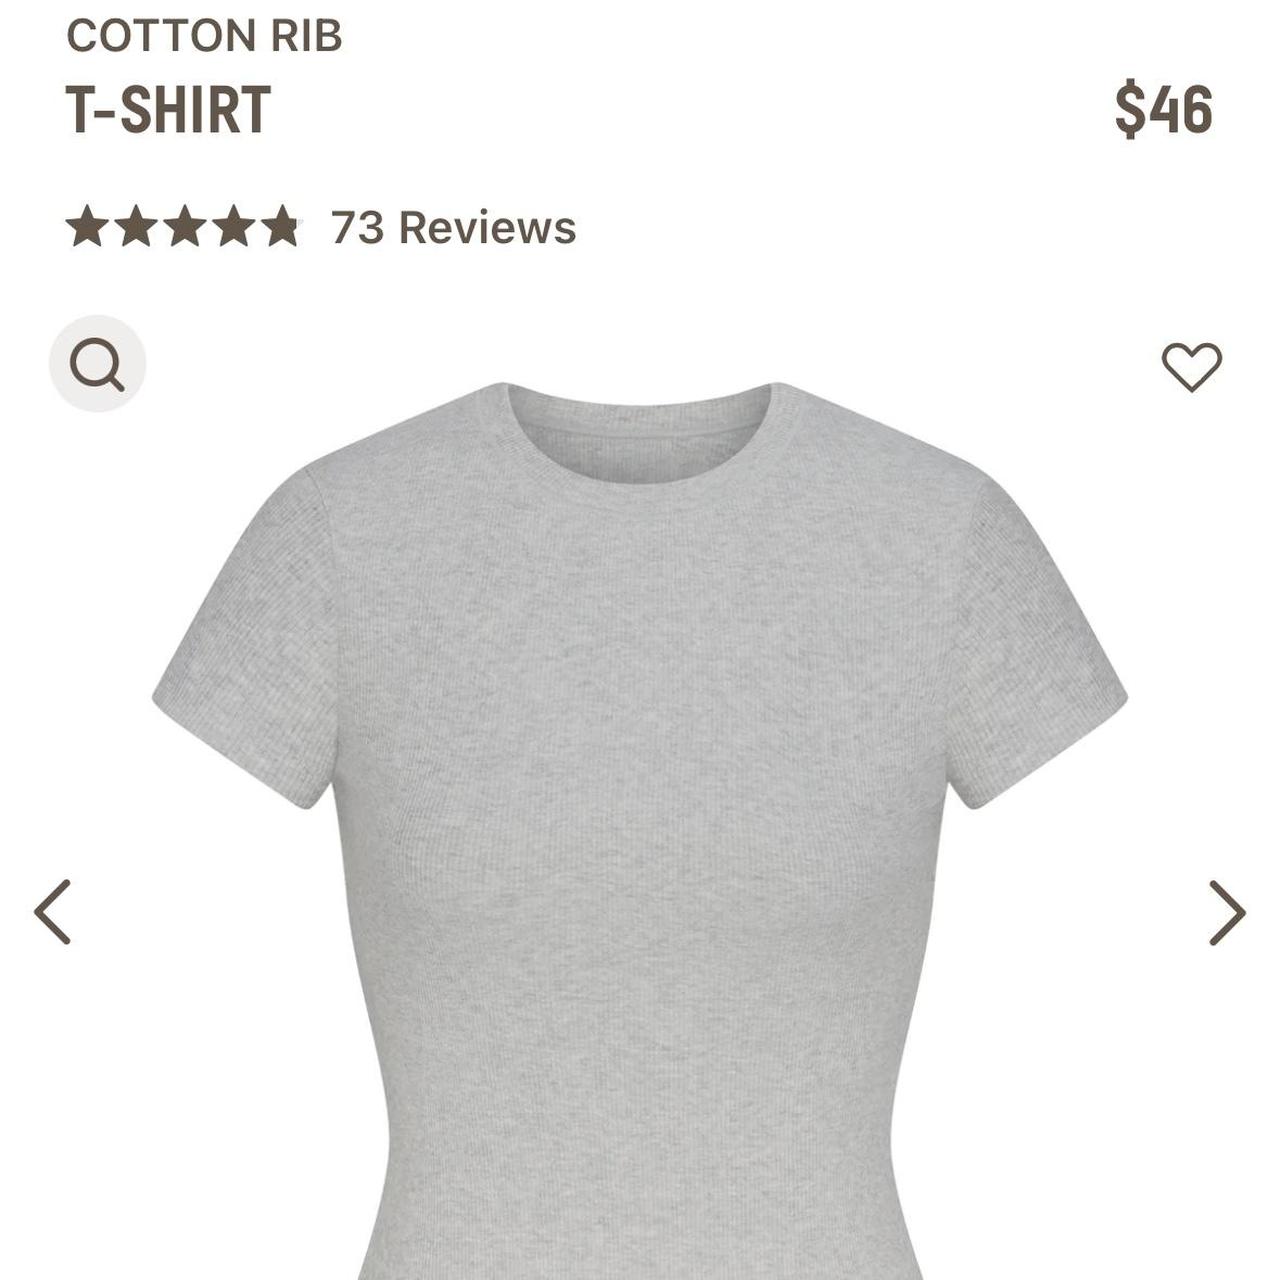 Skims Cotton Rib T-Shirt Never Worn - Depop